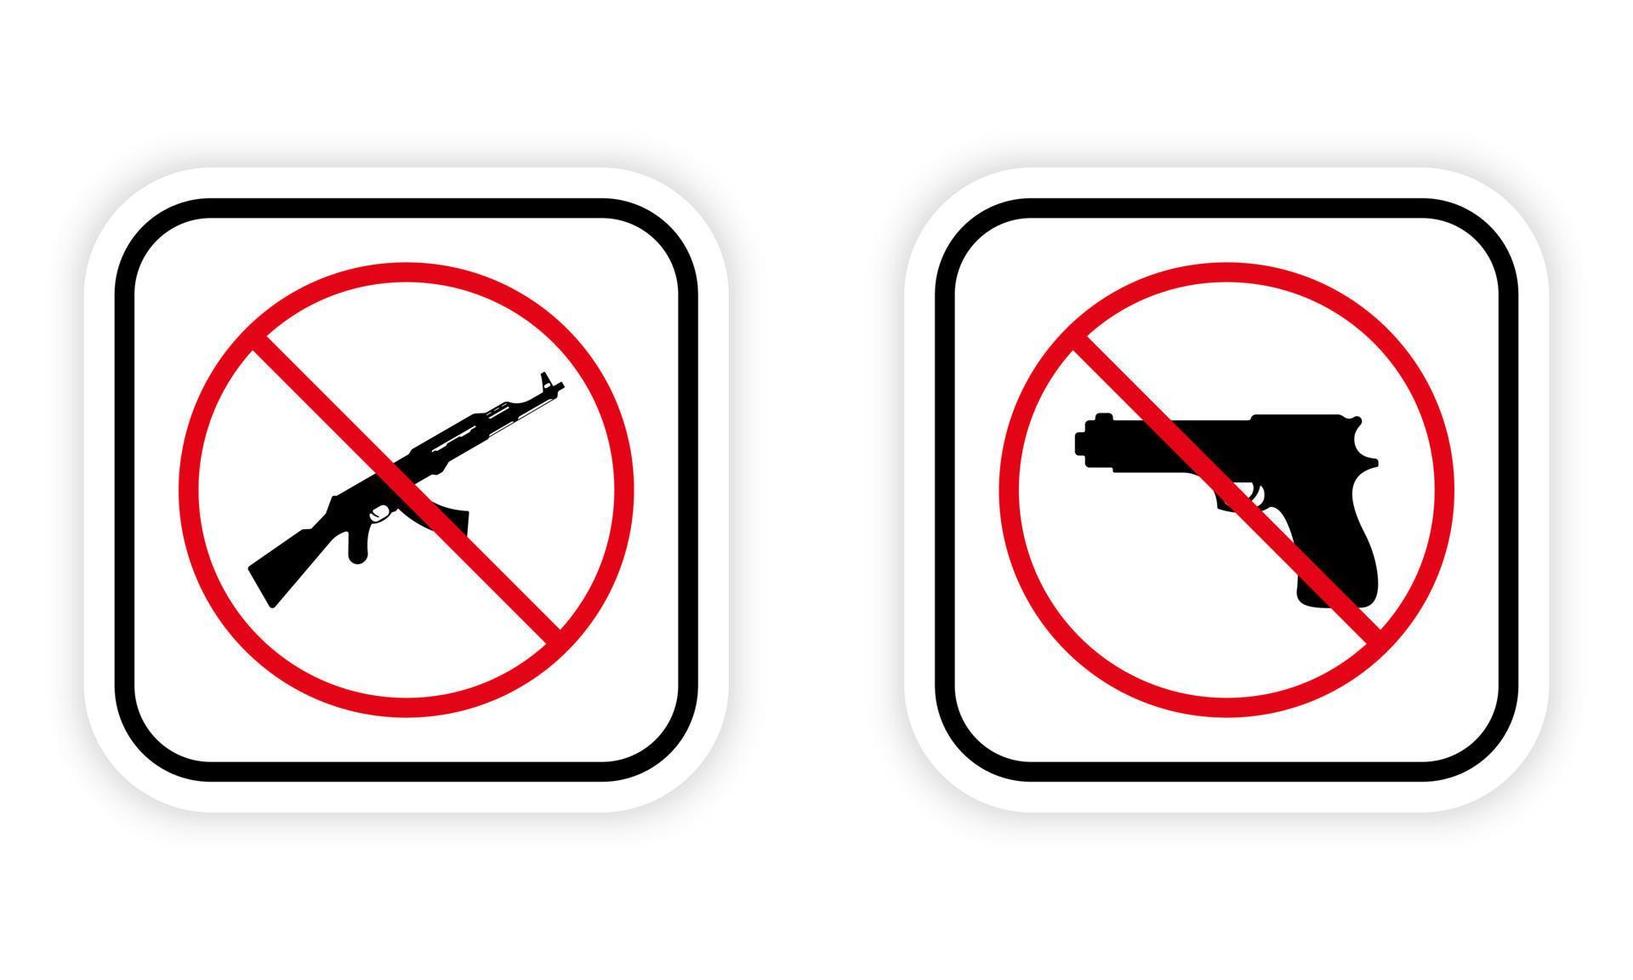 Military Handgun, AK47 Forbidden Pictogram. Hand Gun and AK 47 Automatic Kalashnikov Stop Black Silhouette Icon. Army Weapon Red Ban Symbol. Danger Firearm Prohibited. Isolated Vector Illustration.